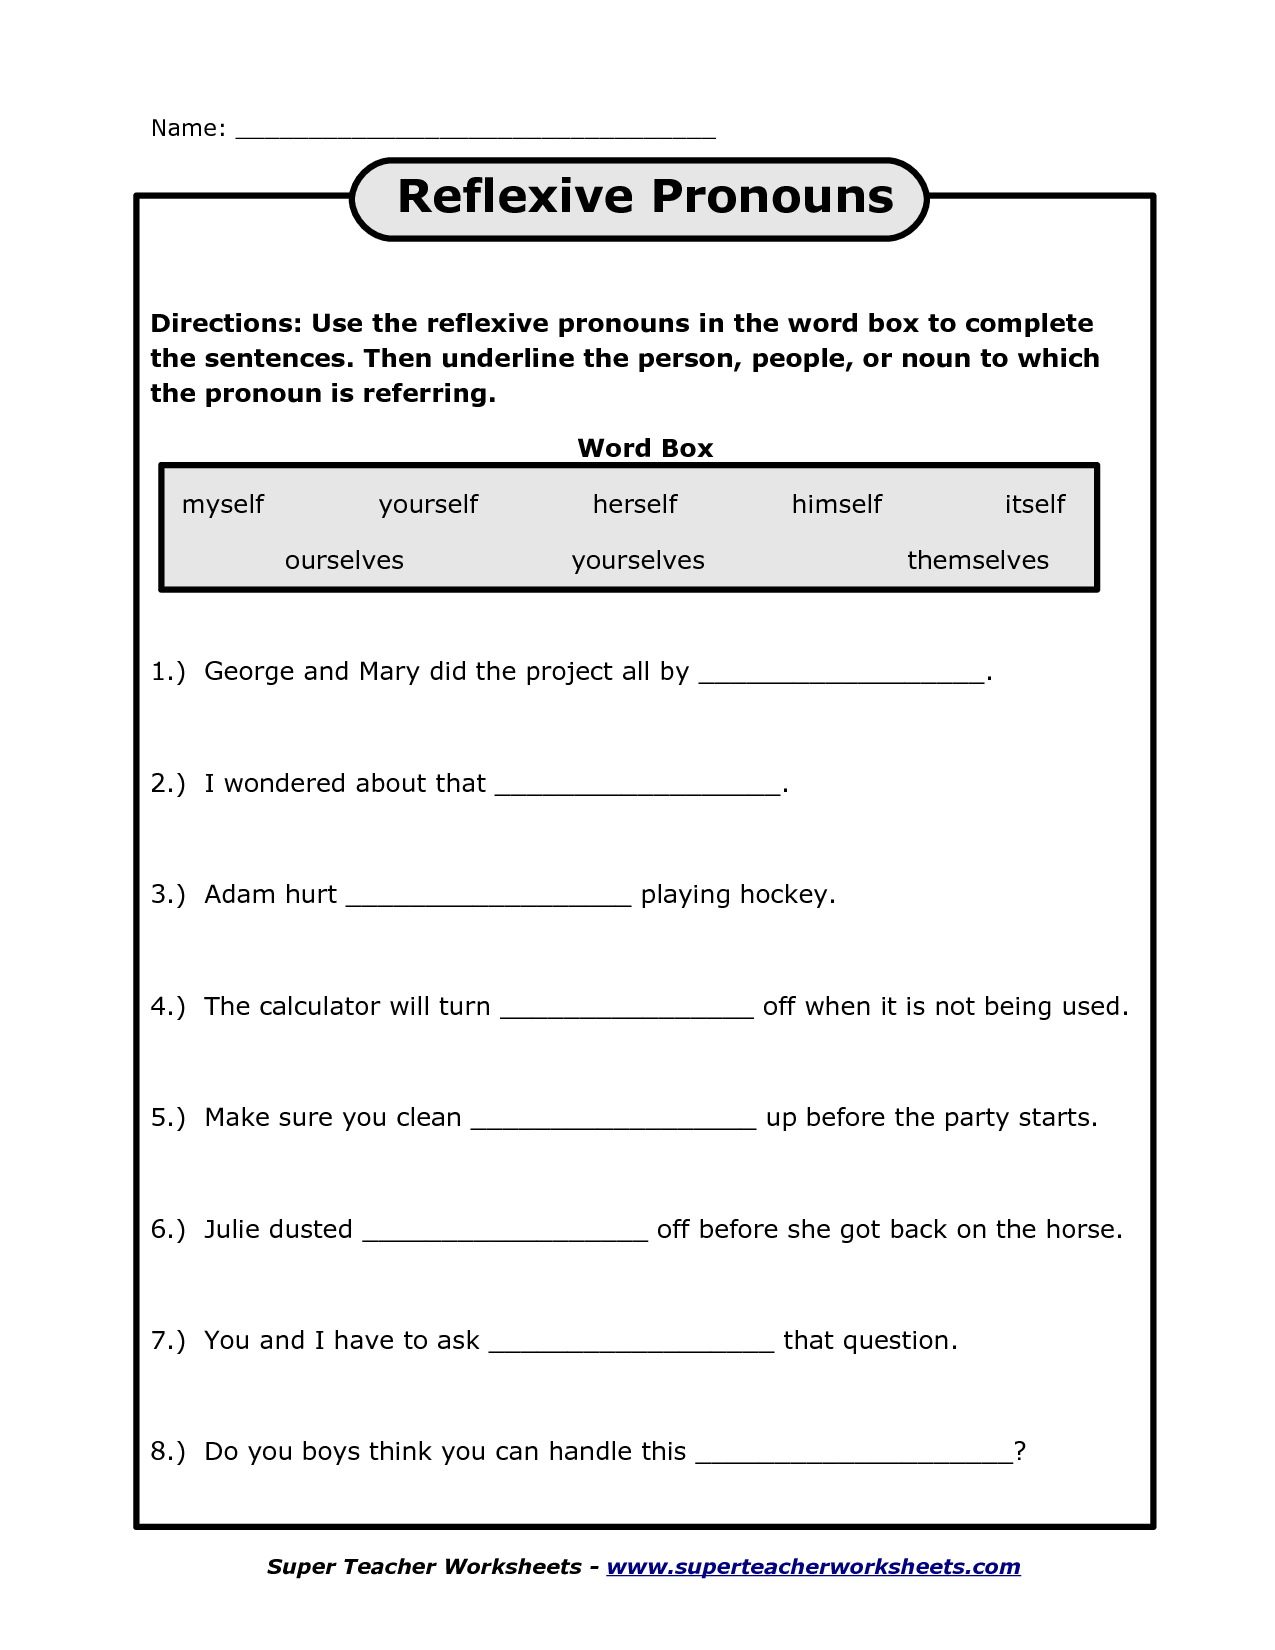 word-usage-worksheets-pronoun-agreement-worksheets